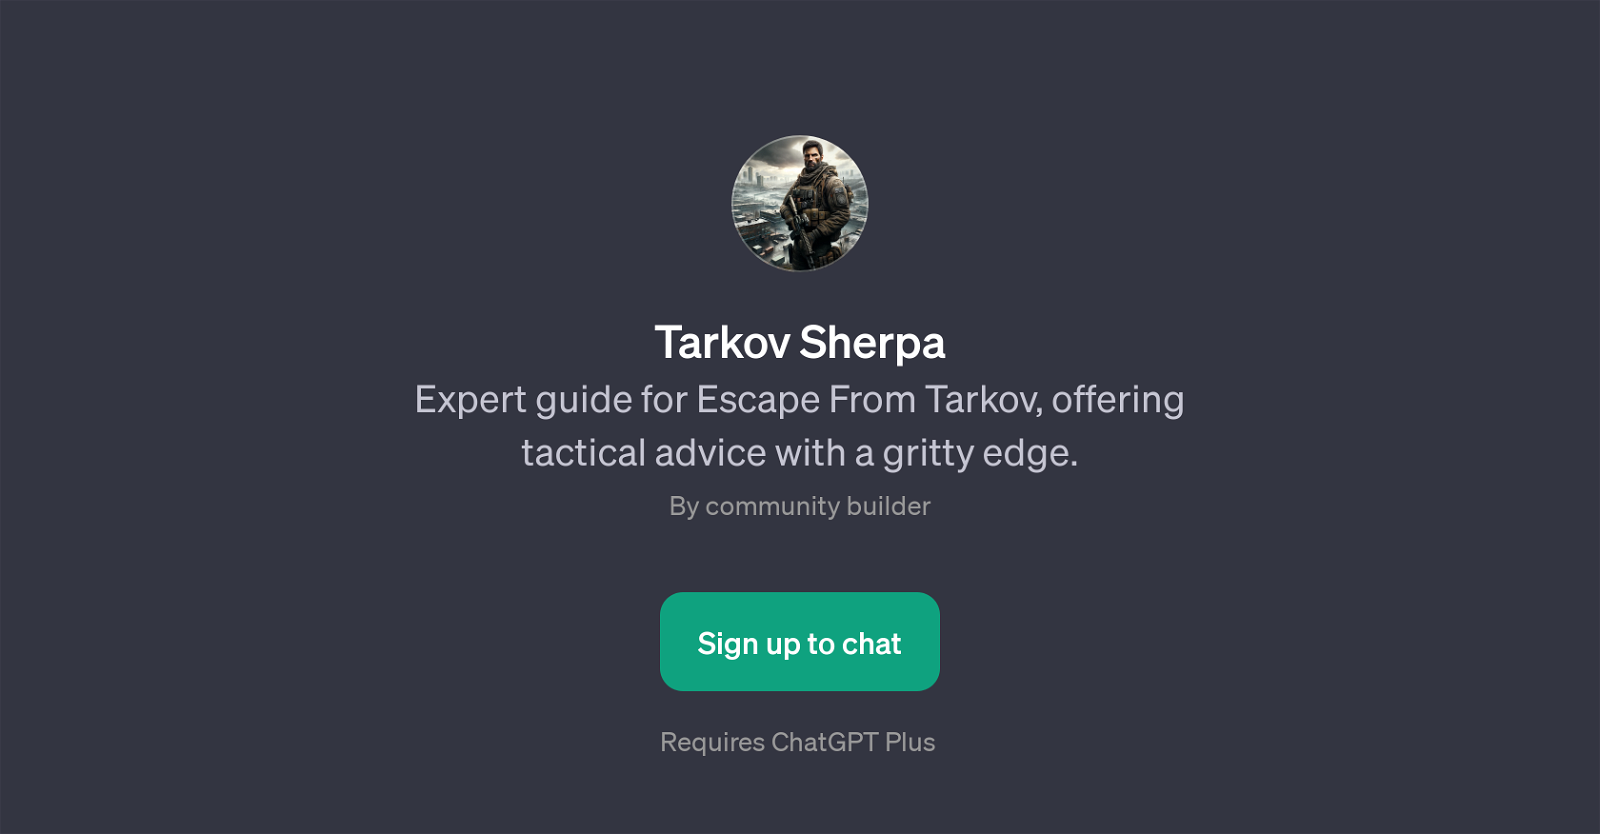 Tarkov Sherpa website